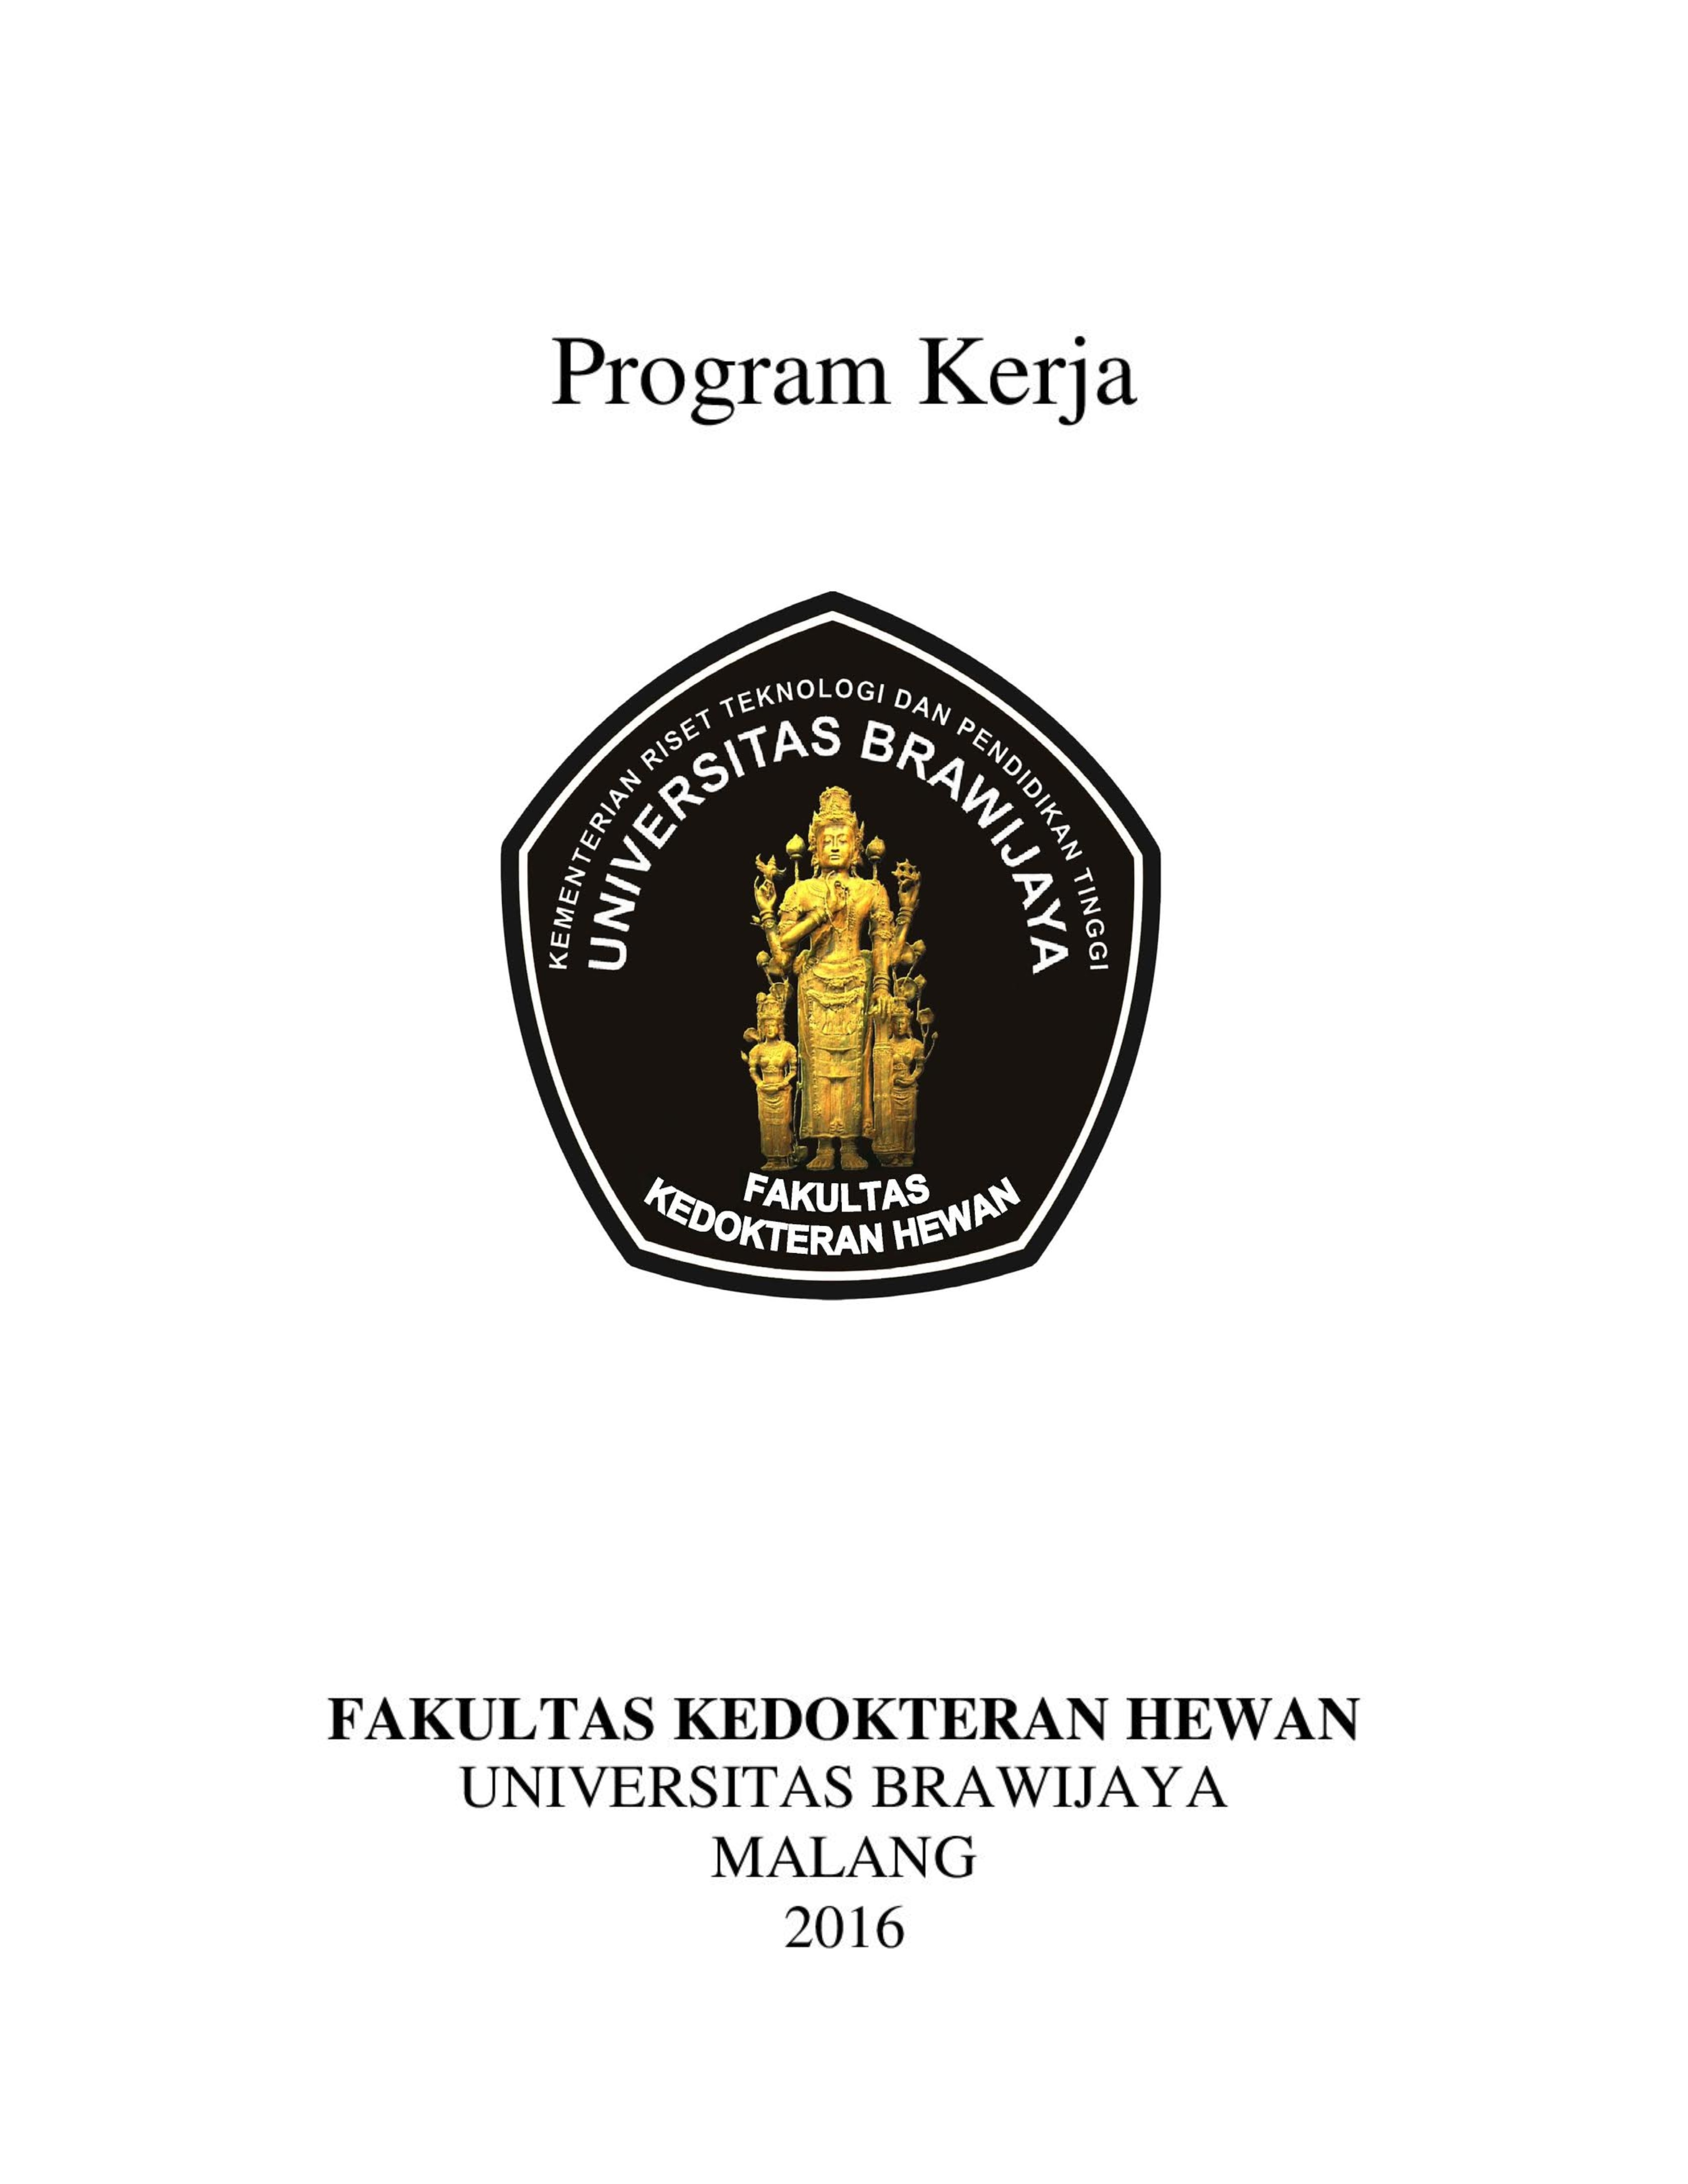 Program Kerja FKH Cover 2016